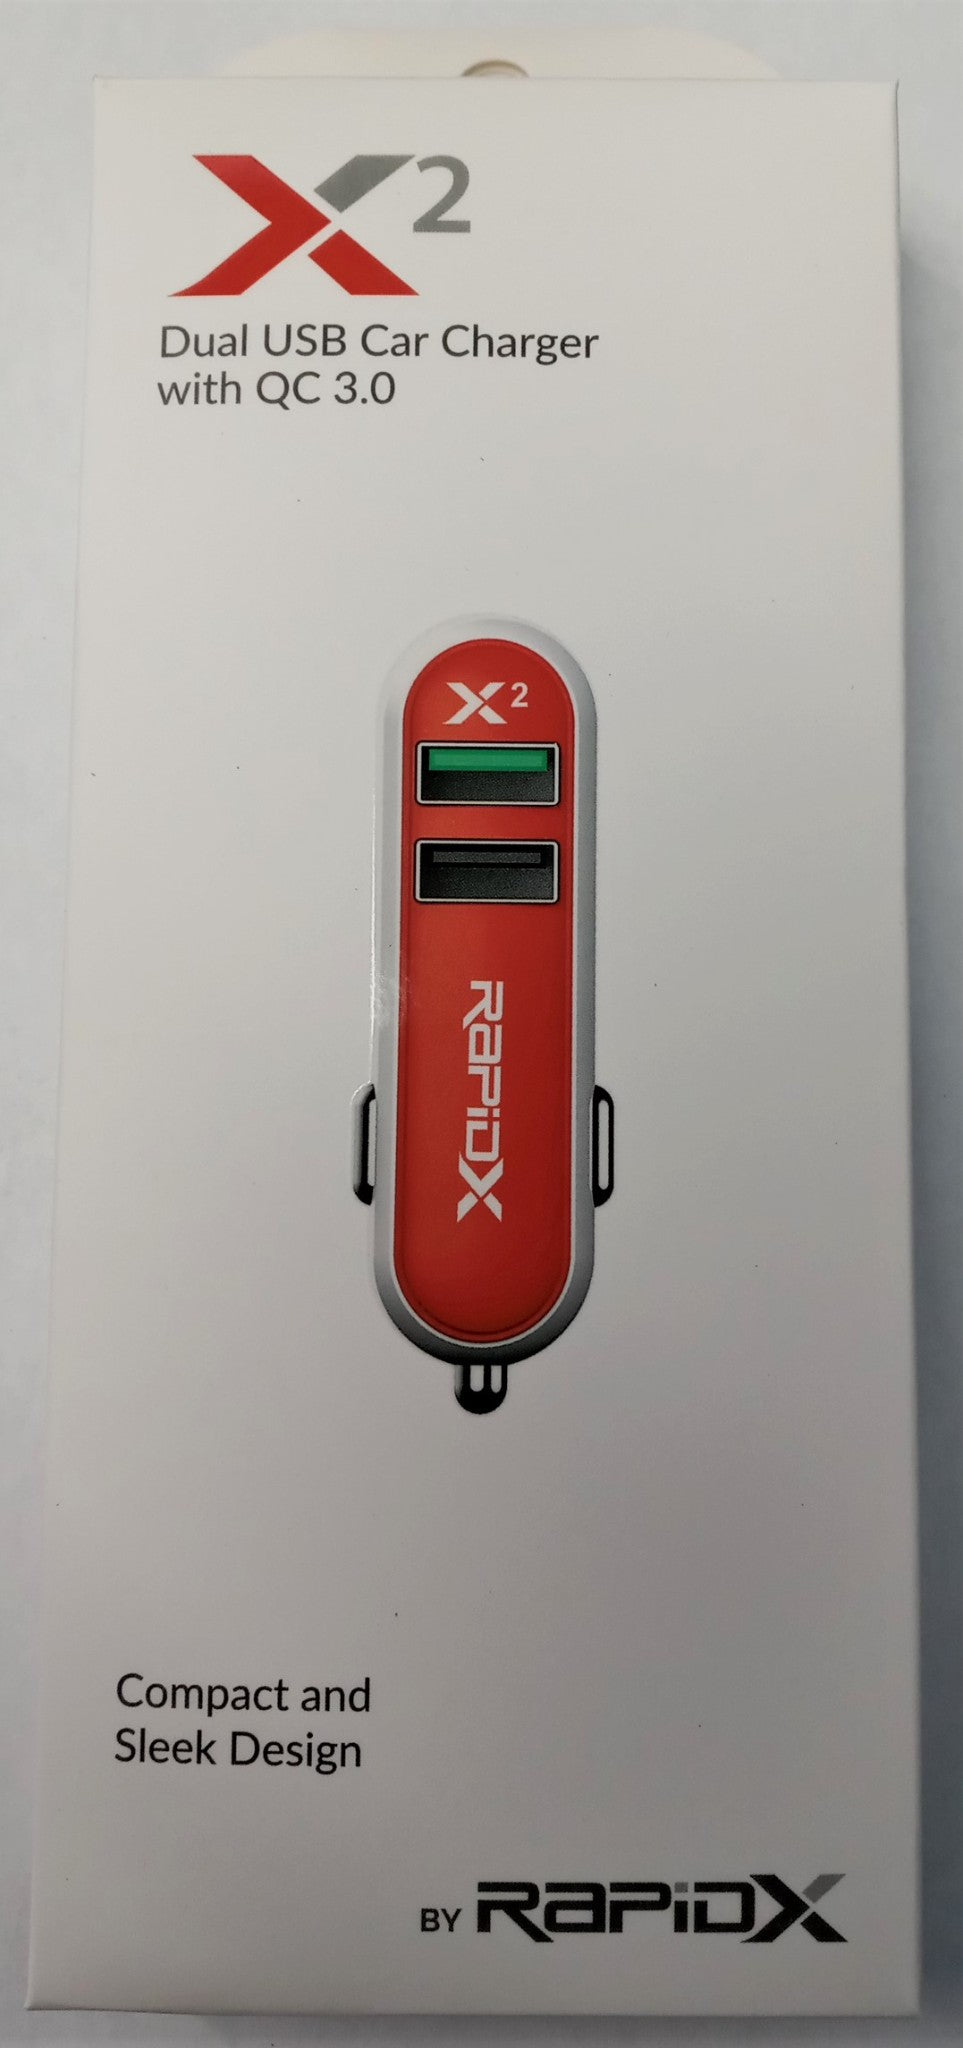 Rapidx RX-X2QCTAN X2 Dual USB Car Charger with QC 3.0